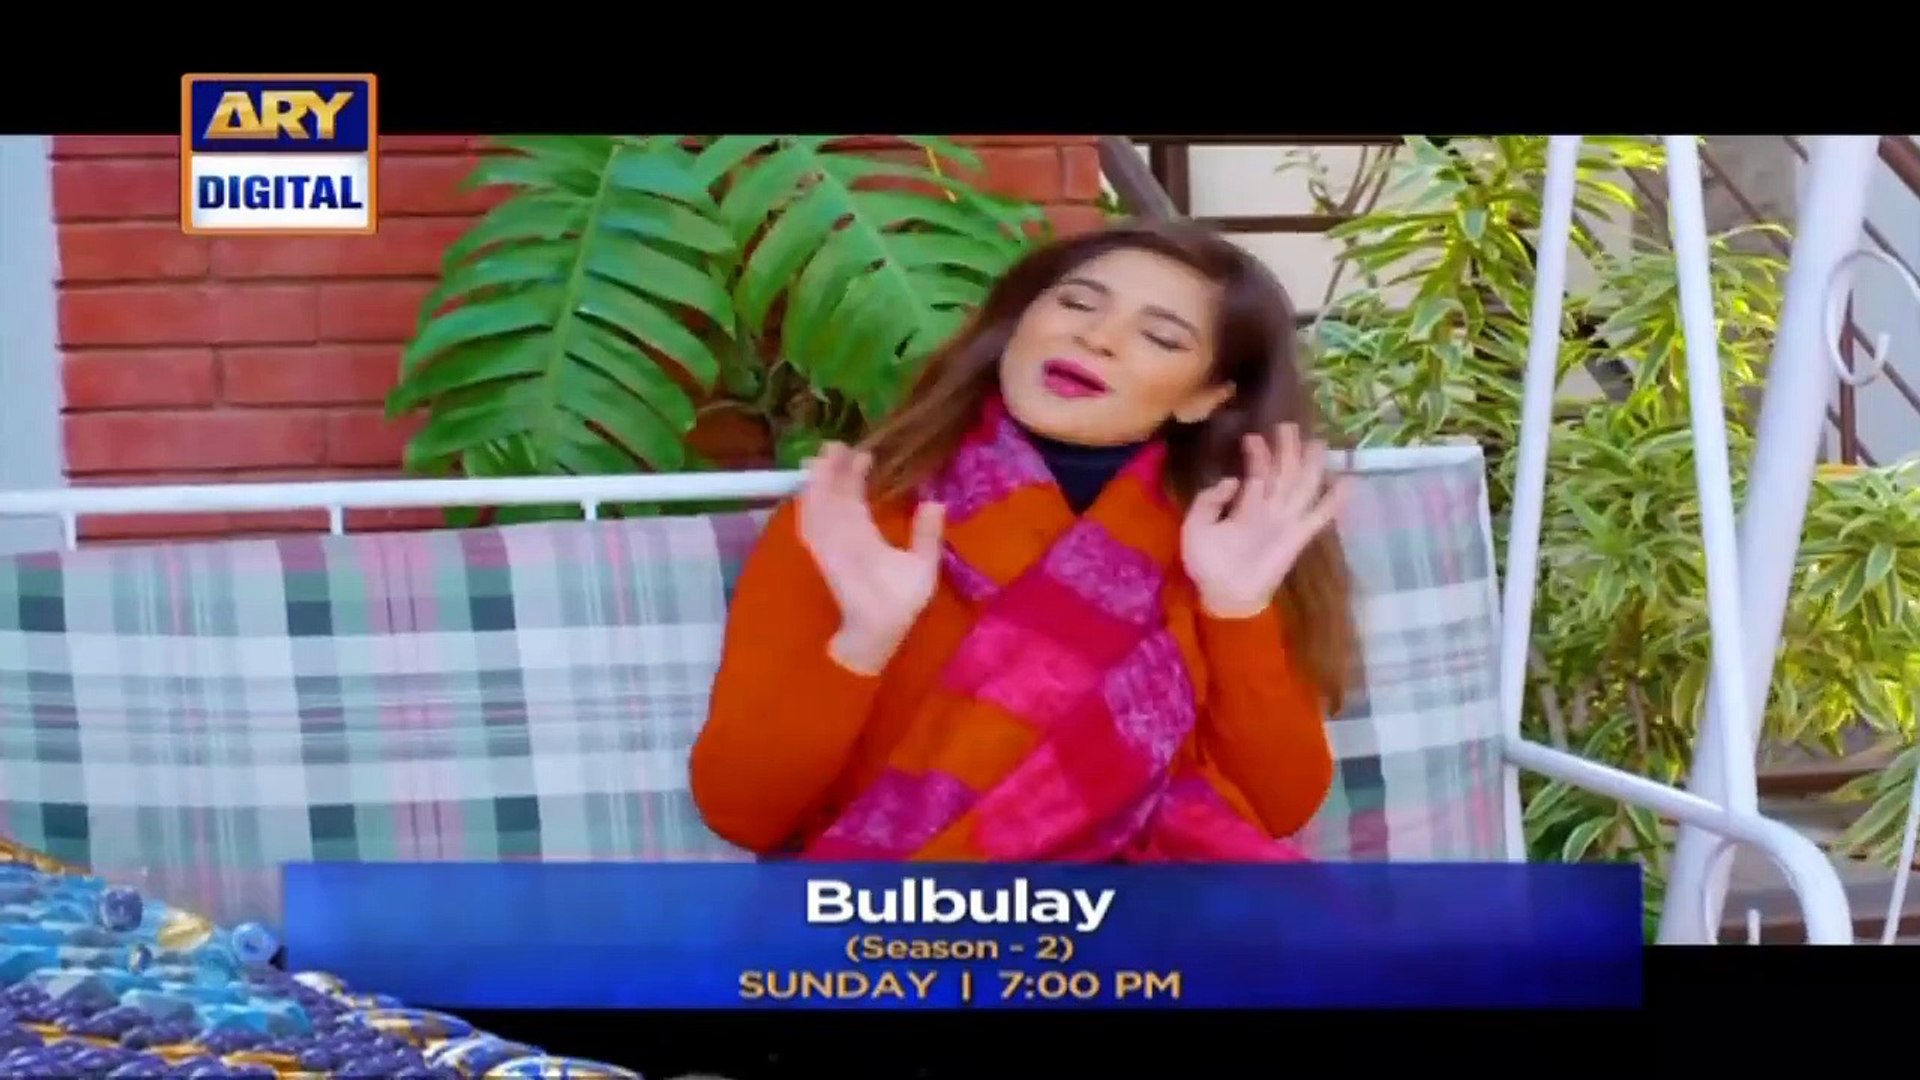 Bulbulay season episode promo ary digital drama